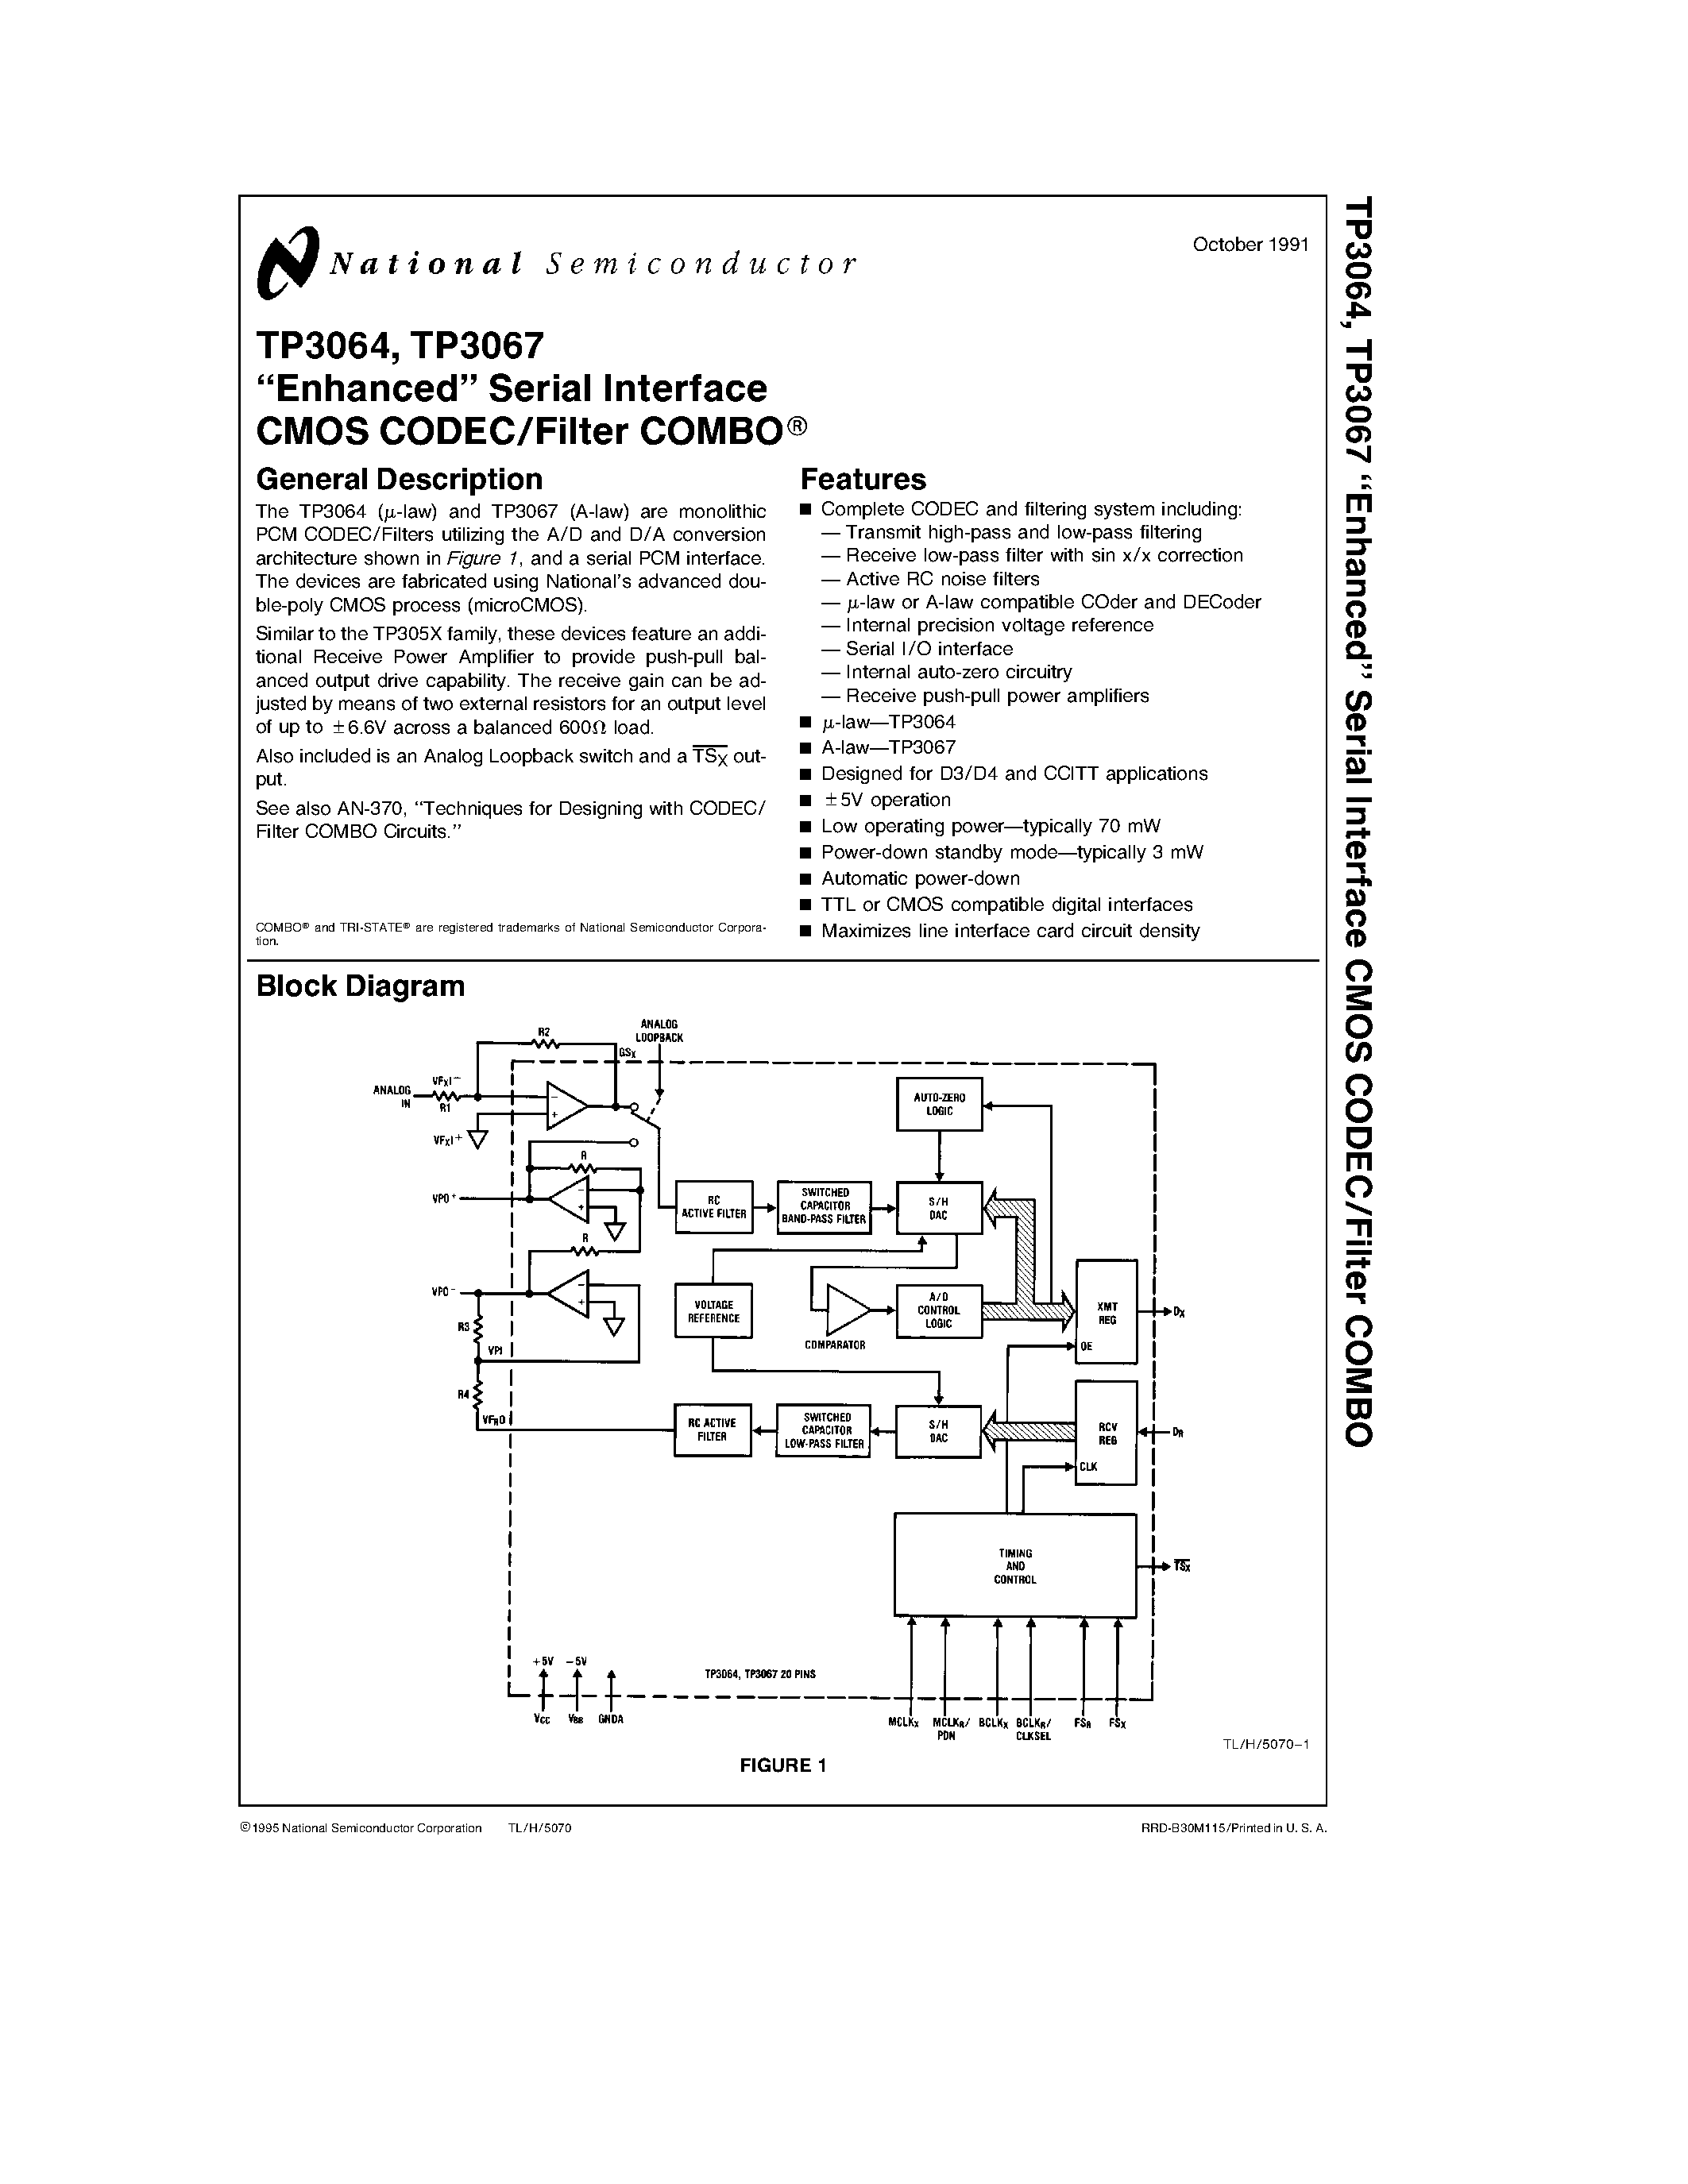 Даташит TP3067J - Enhanced Serial Interface CMOS CODEC/Filter COMBO страница 1